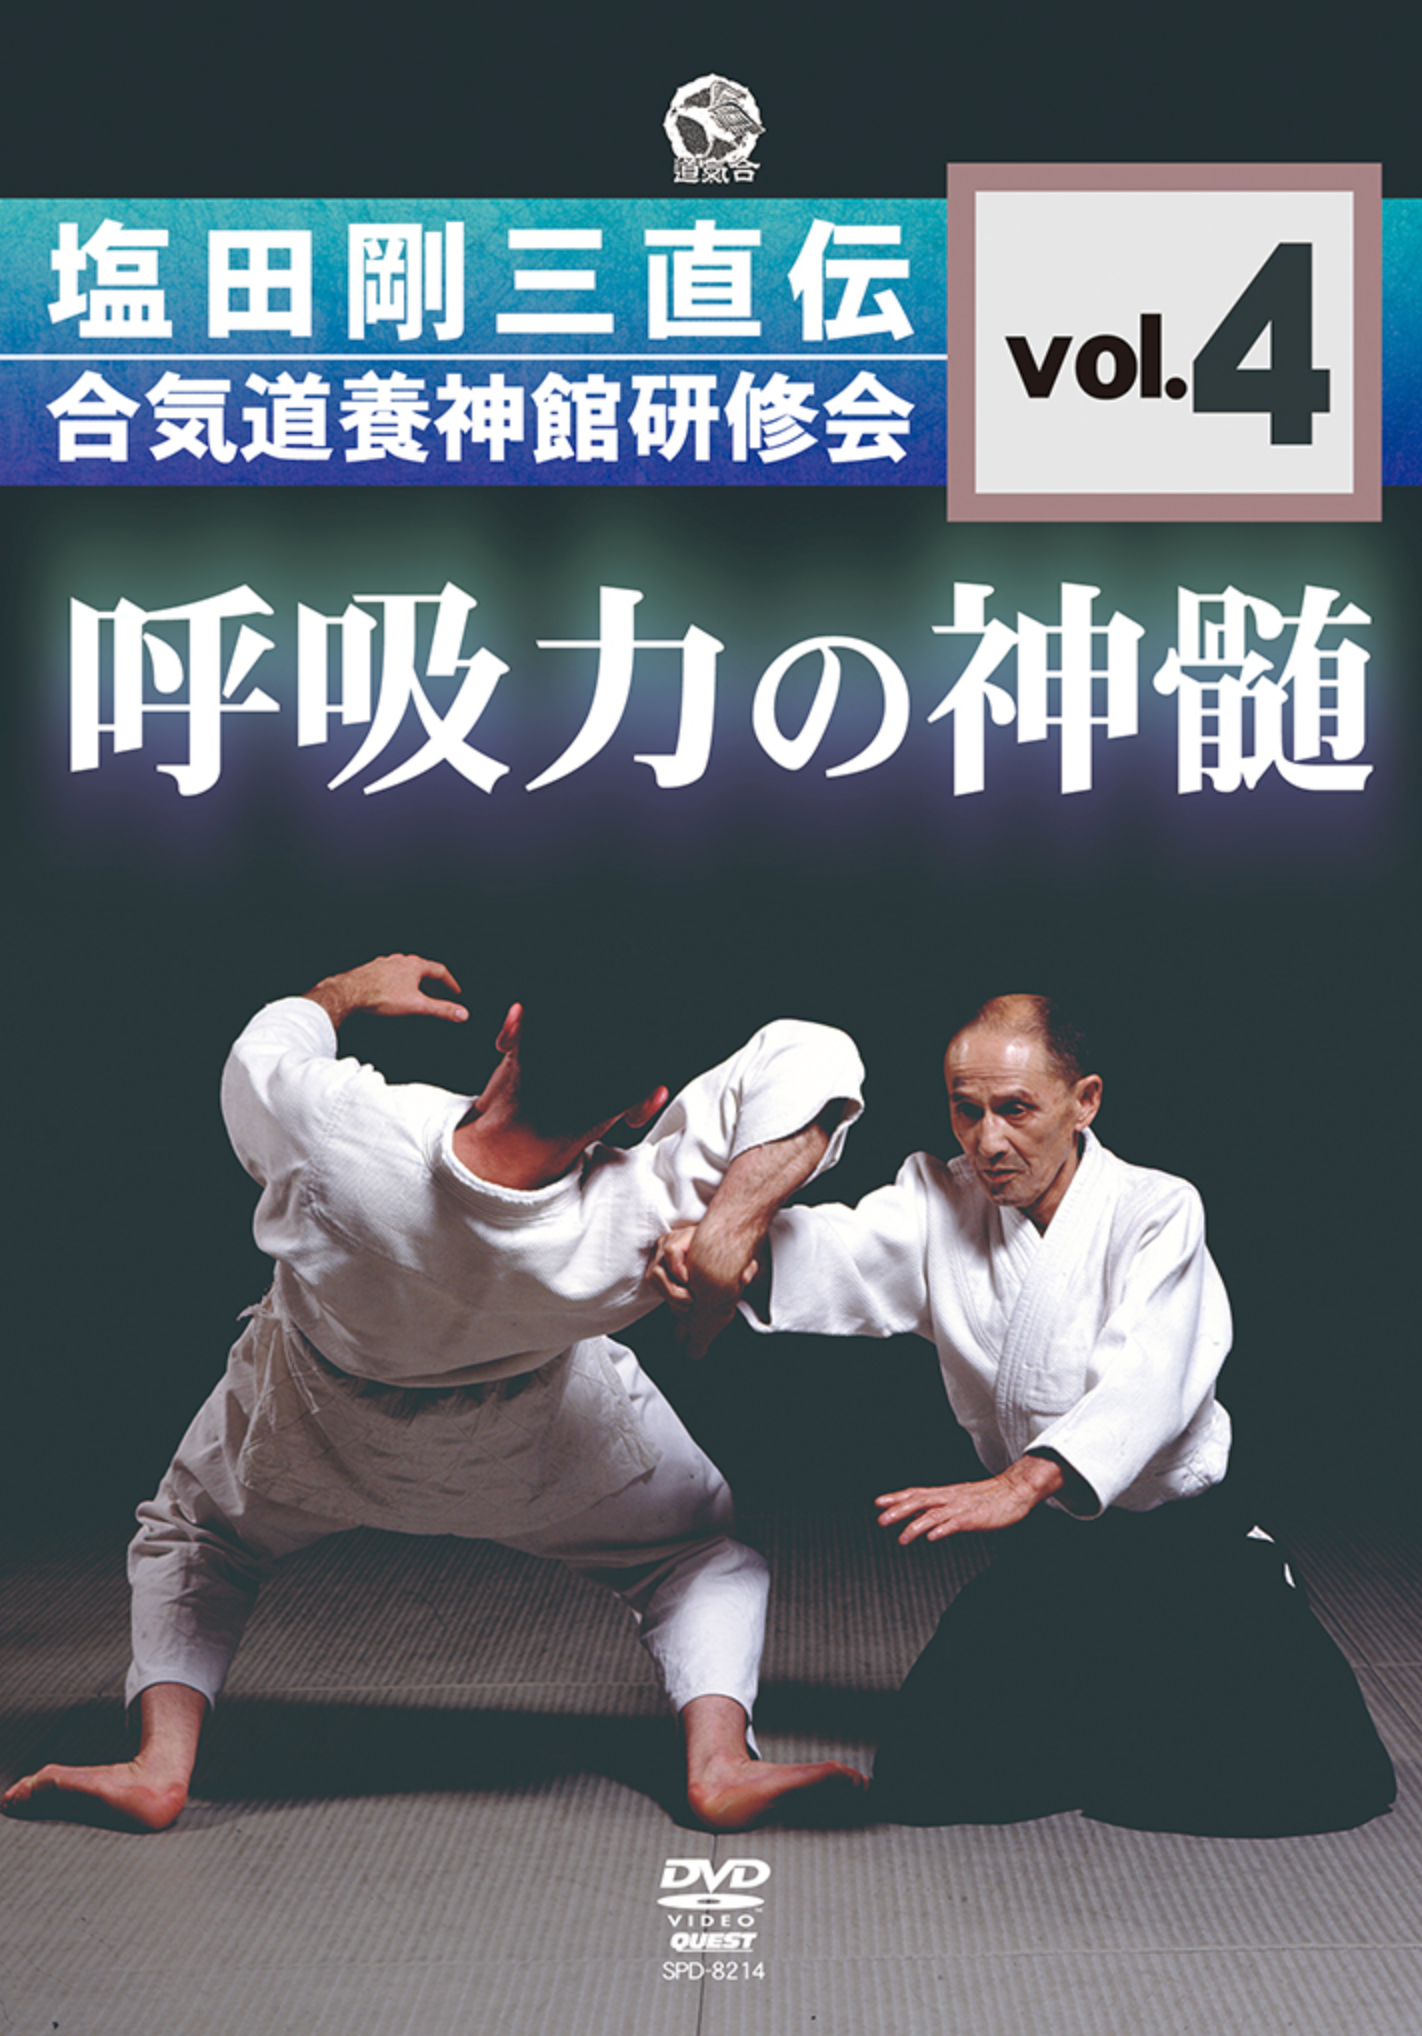 Essence of Kokyu Ryoku Vol 4 DVD with Gozo Shioda - Budovideos Inc